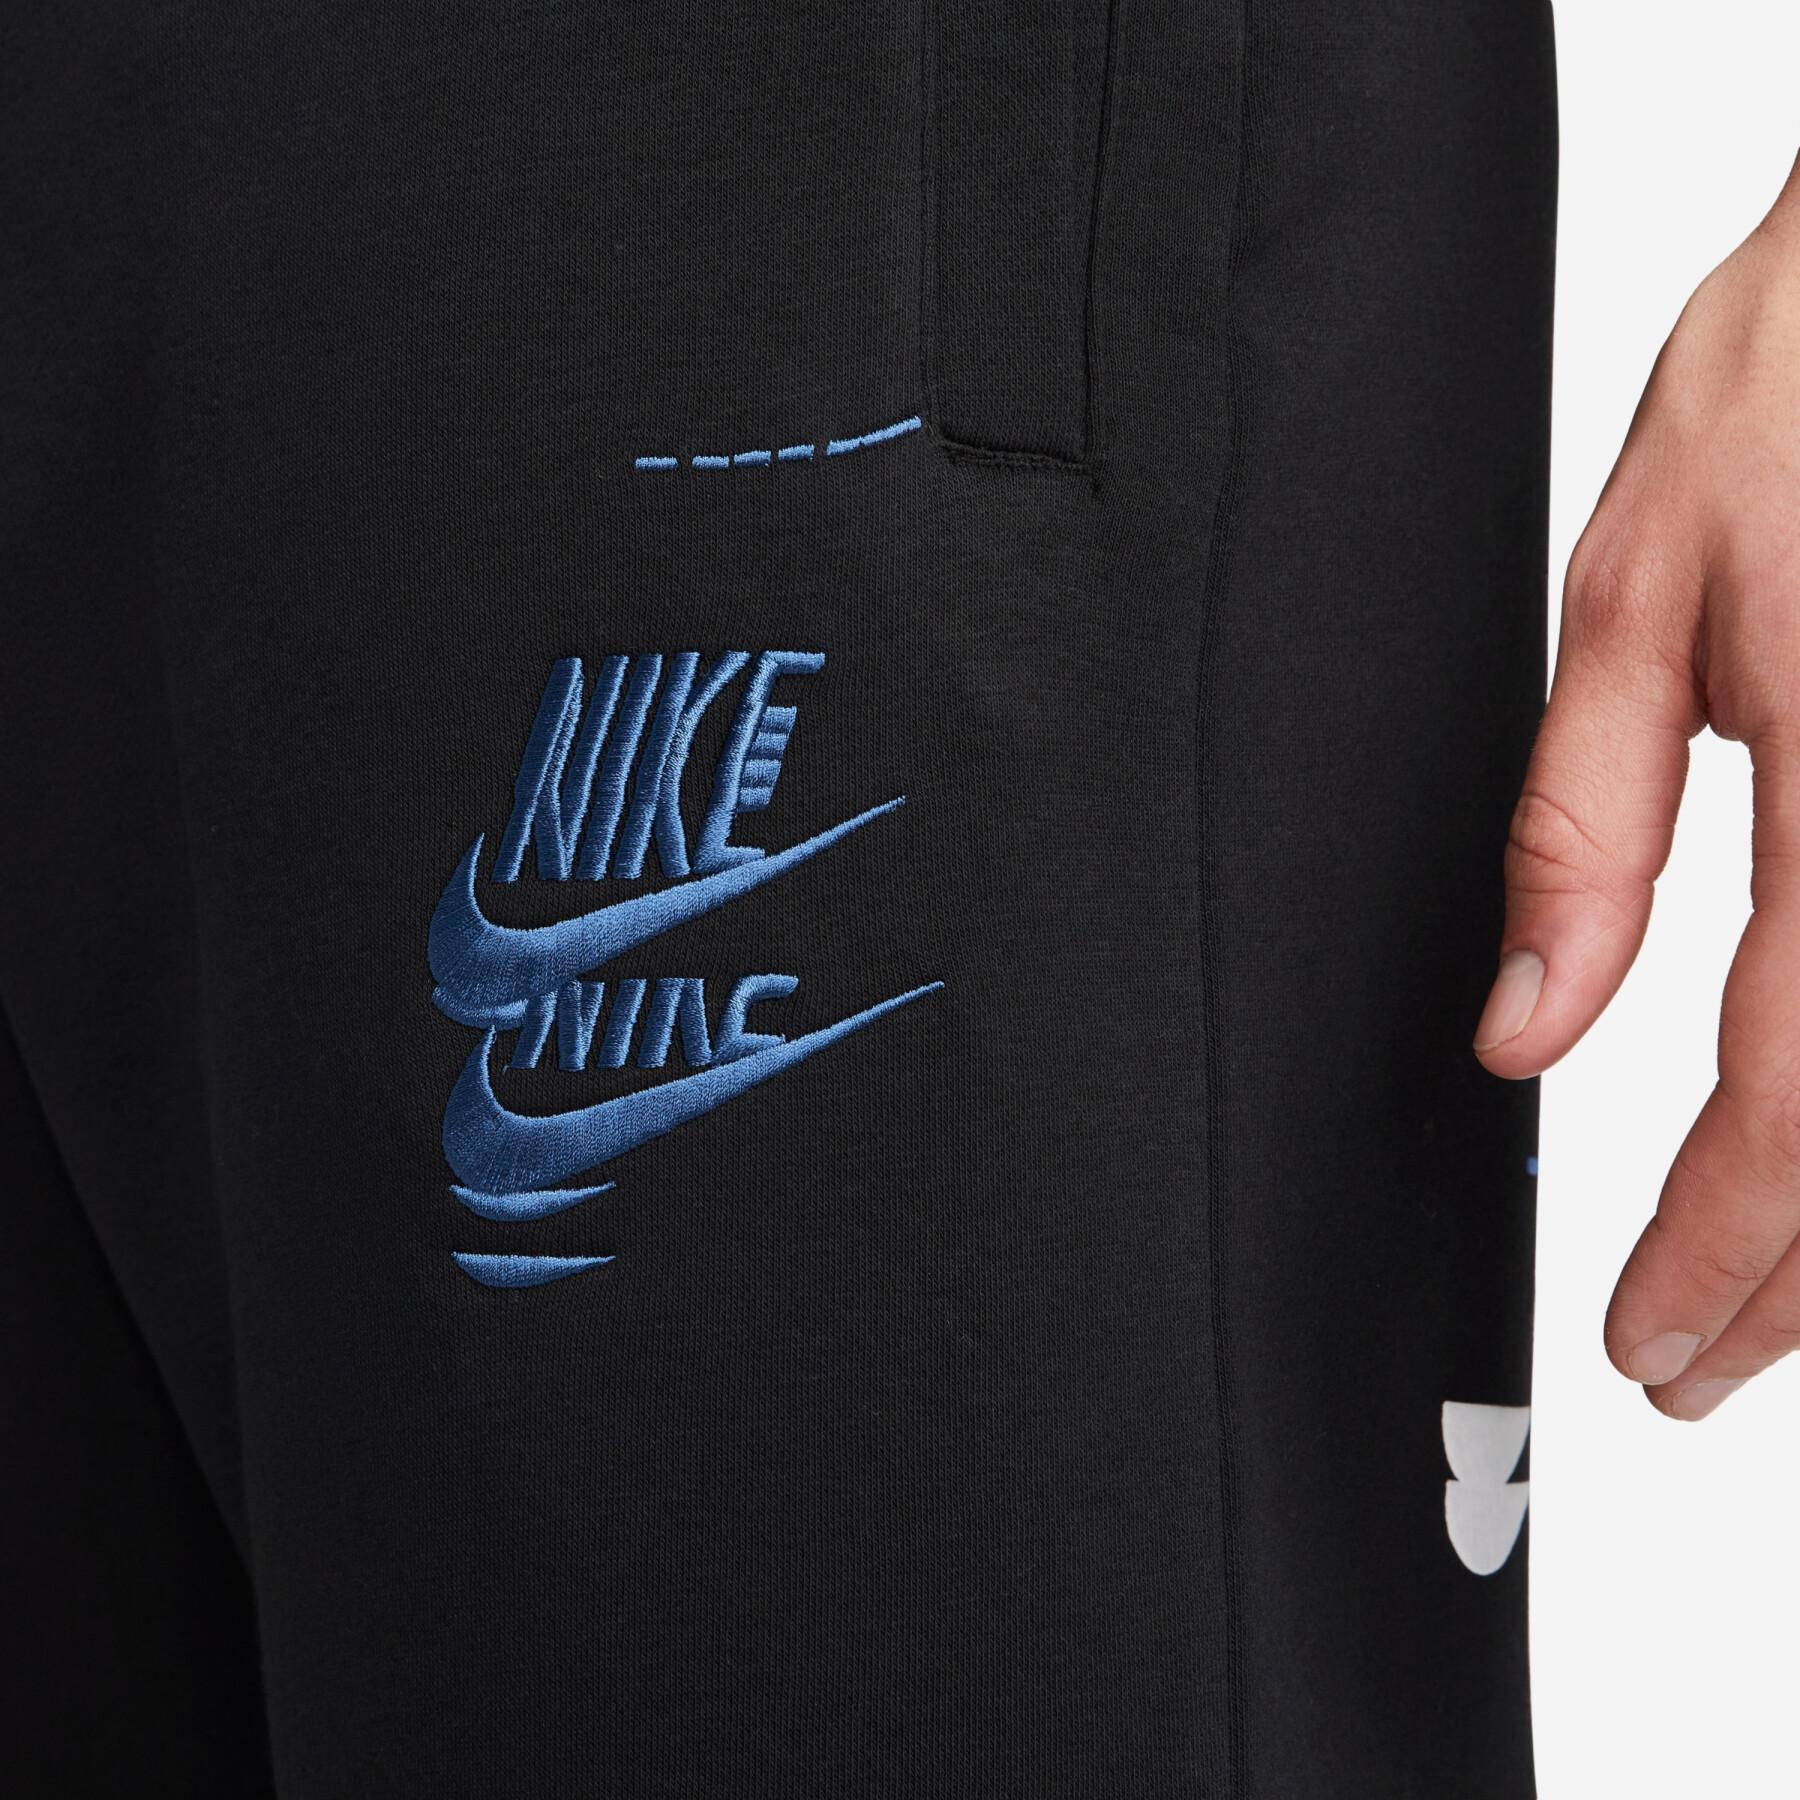 Short Nike Sport Essentials +